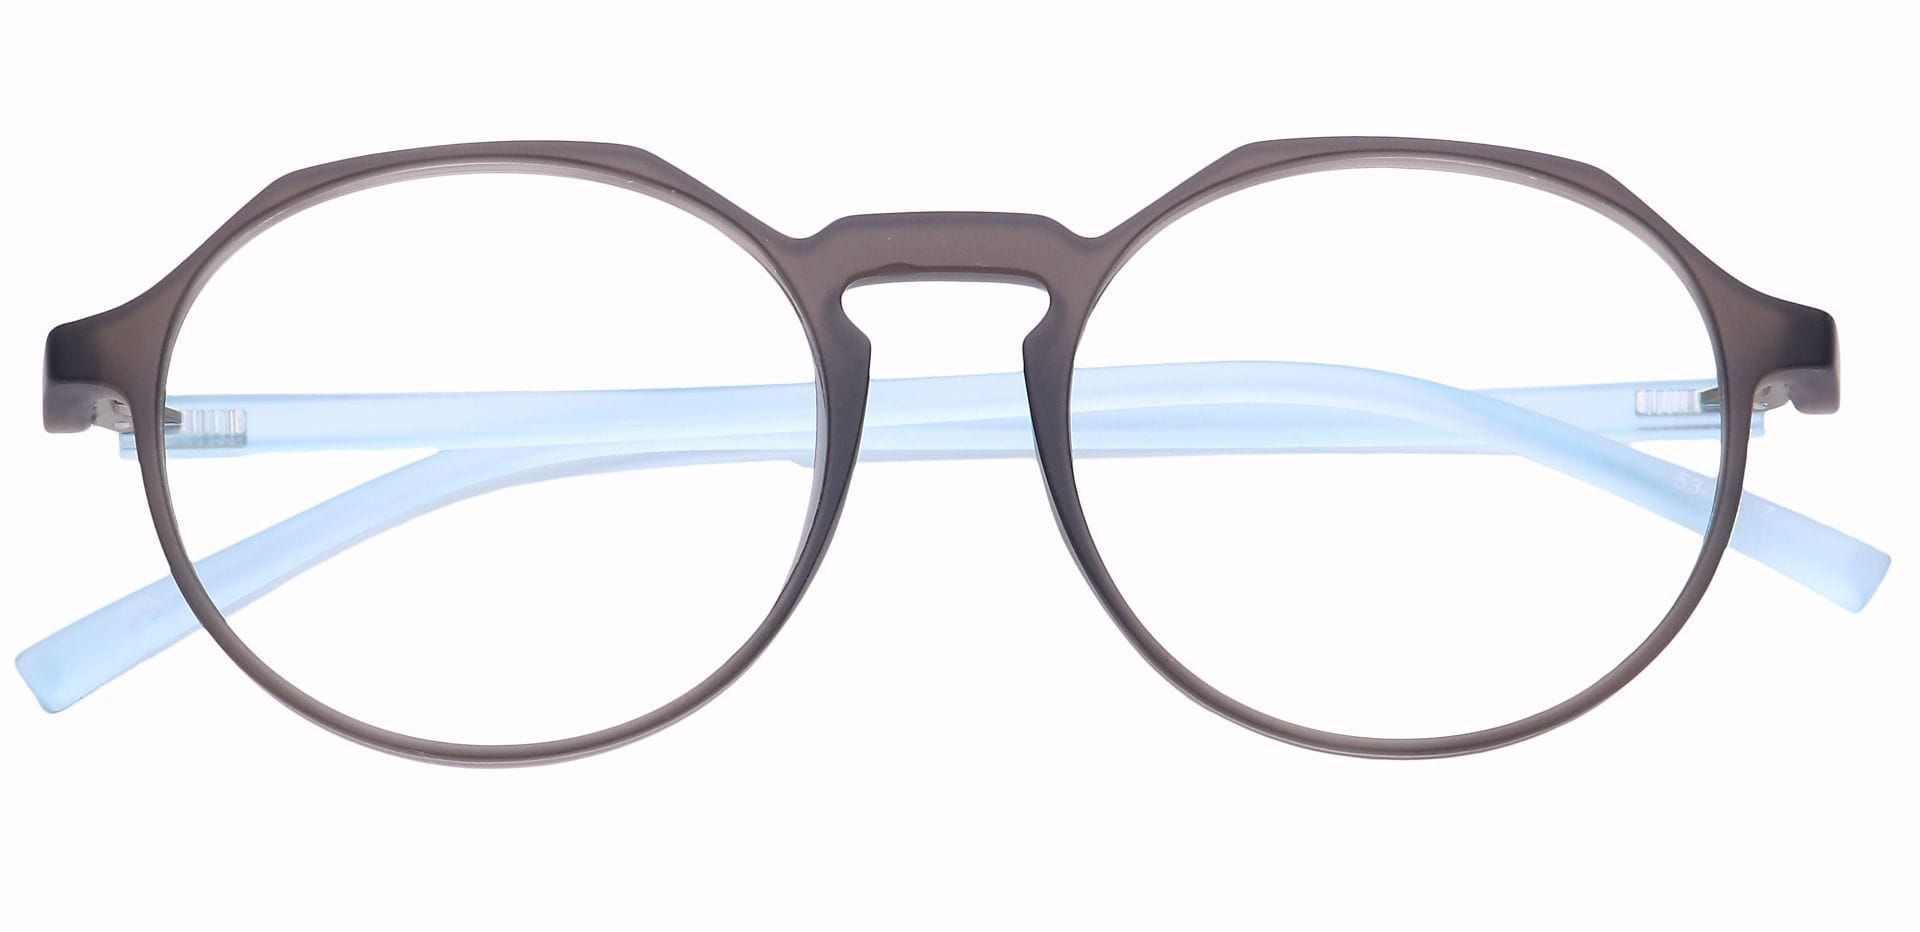 Paragon Oval Prescription Glasses - Blue